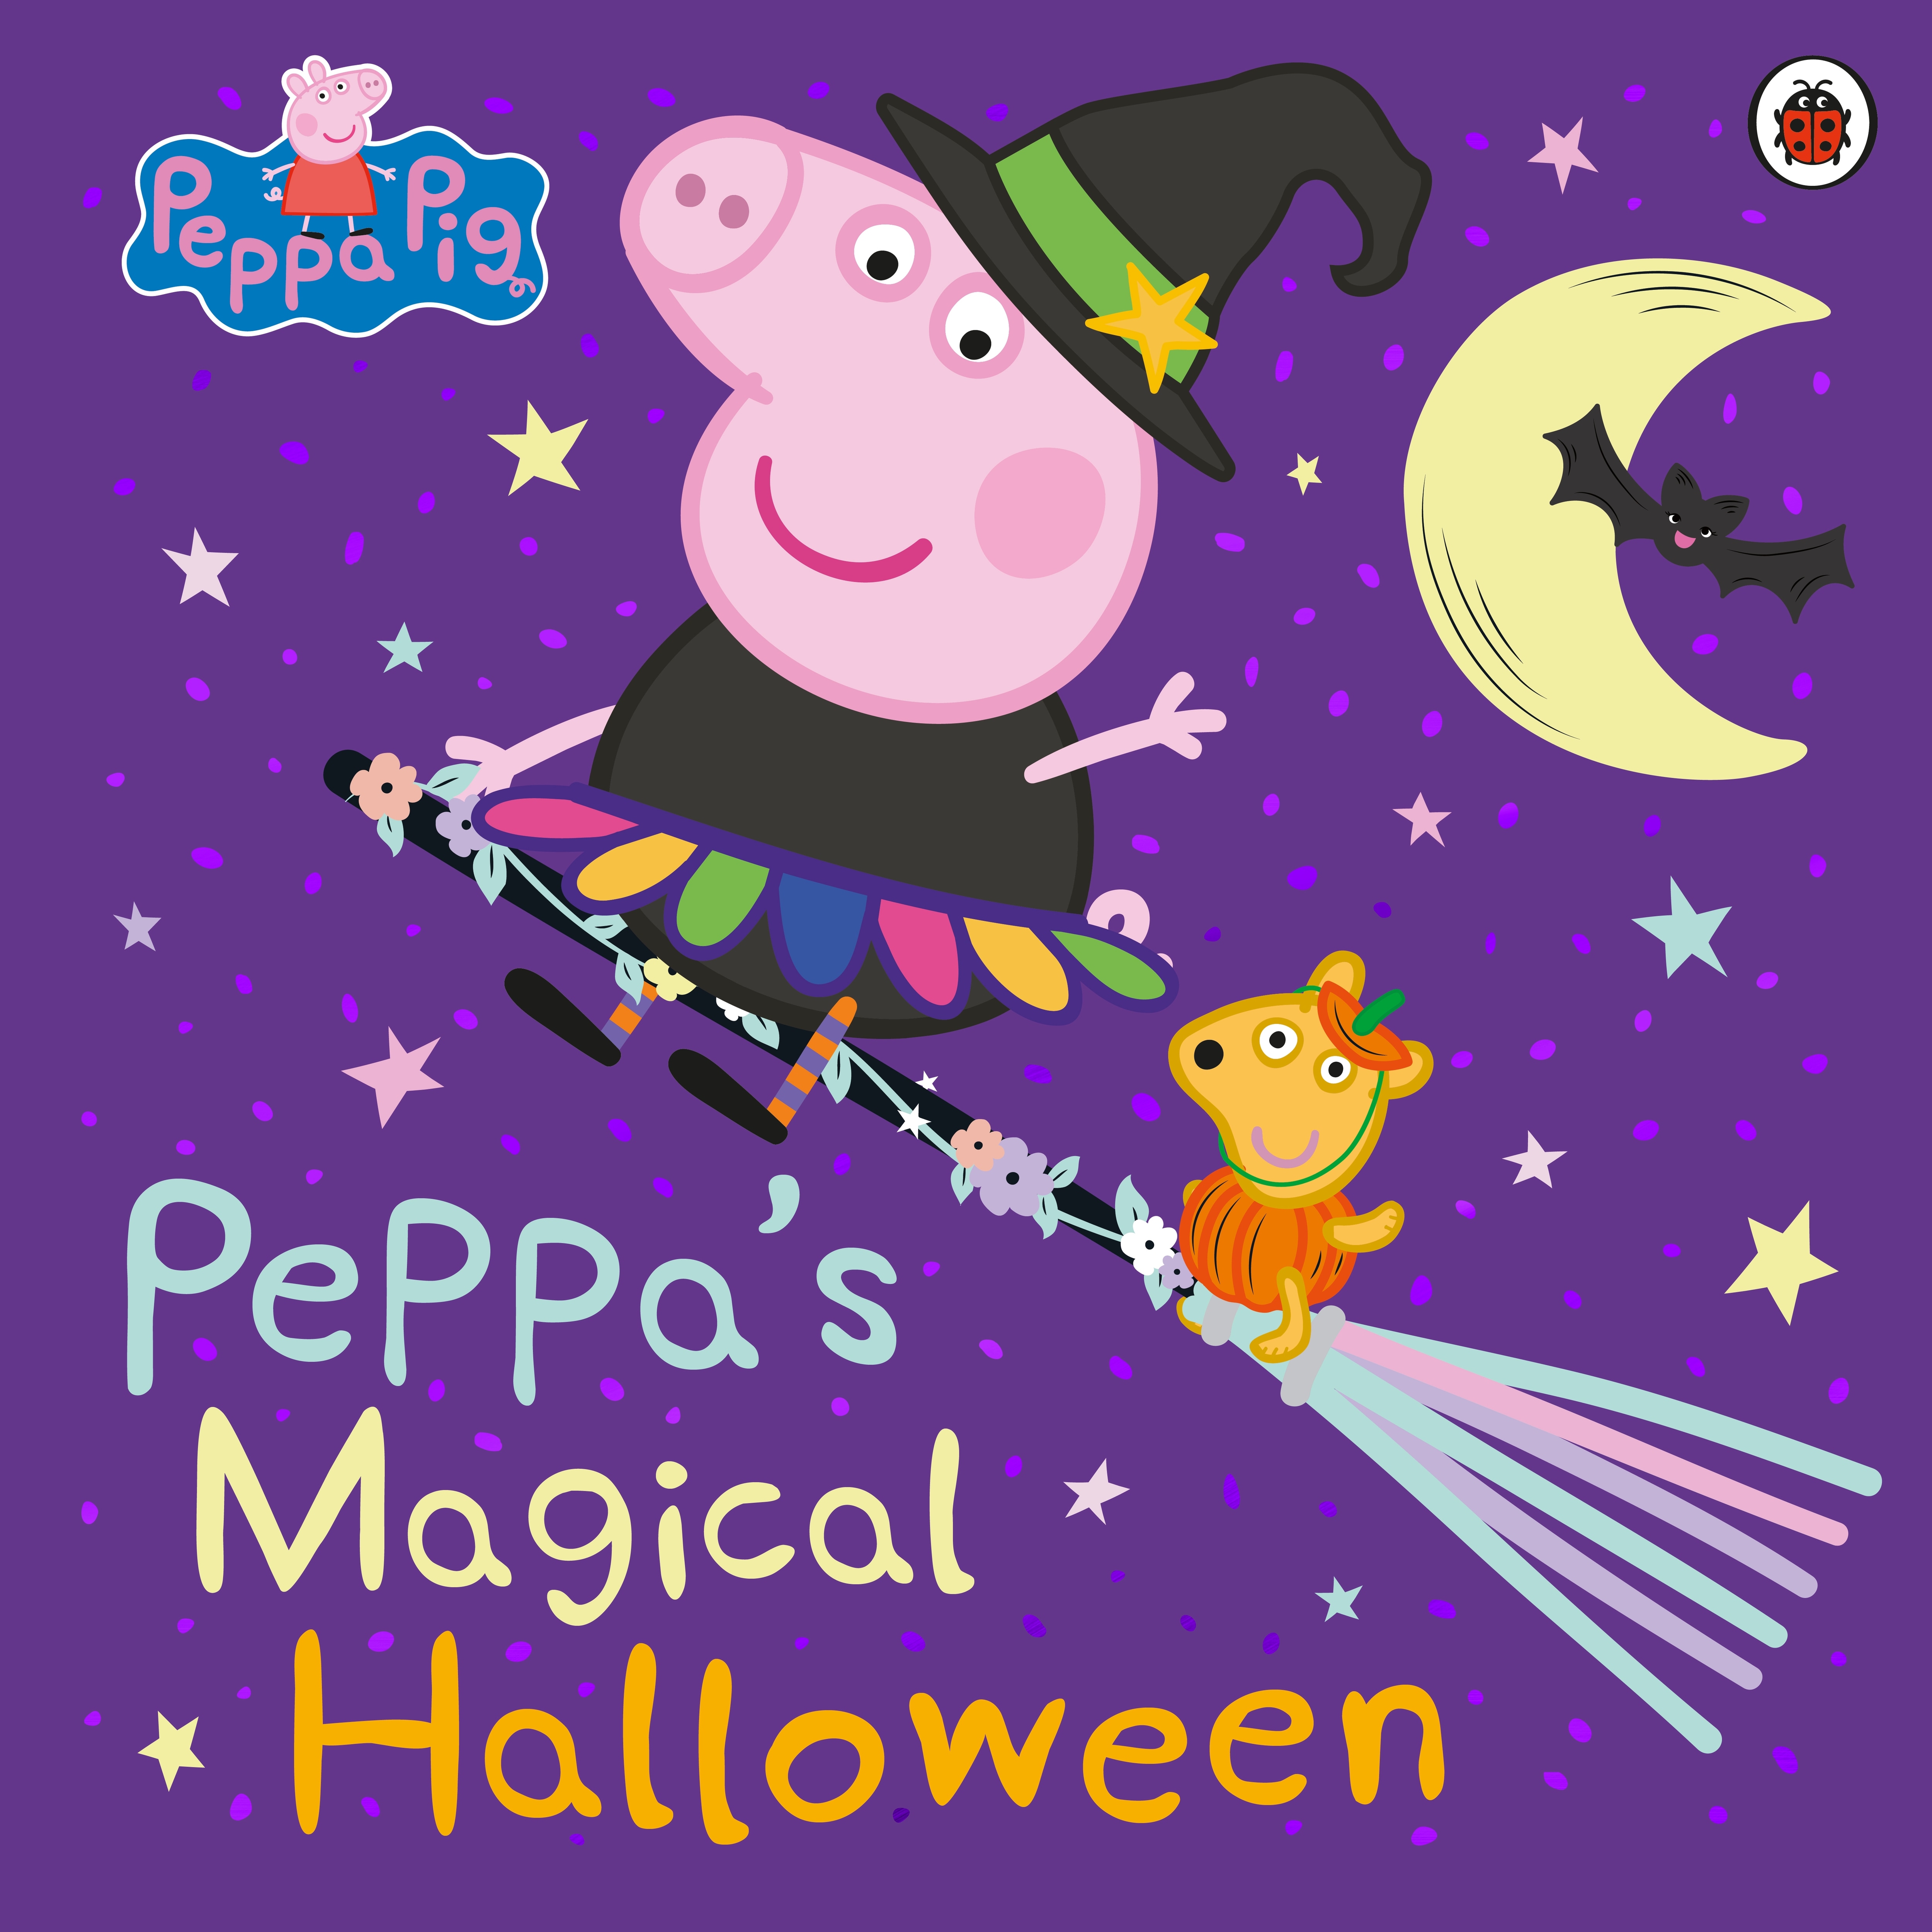 Book “Peppa Pig: Peppa's Magical Halloween” by Peppa Pig — September 15, 2022